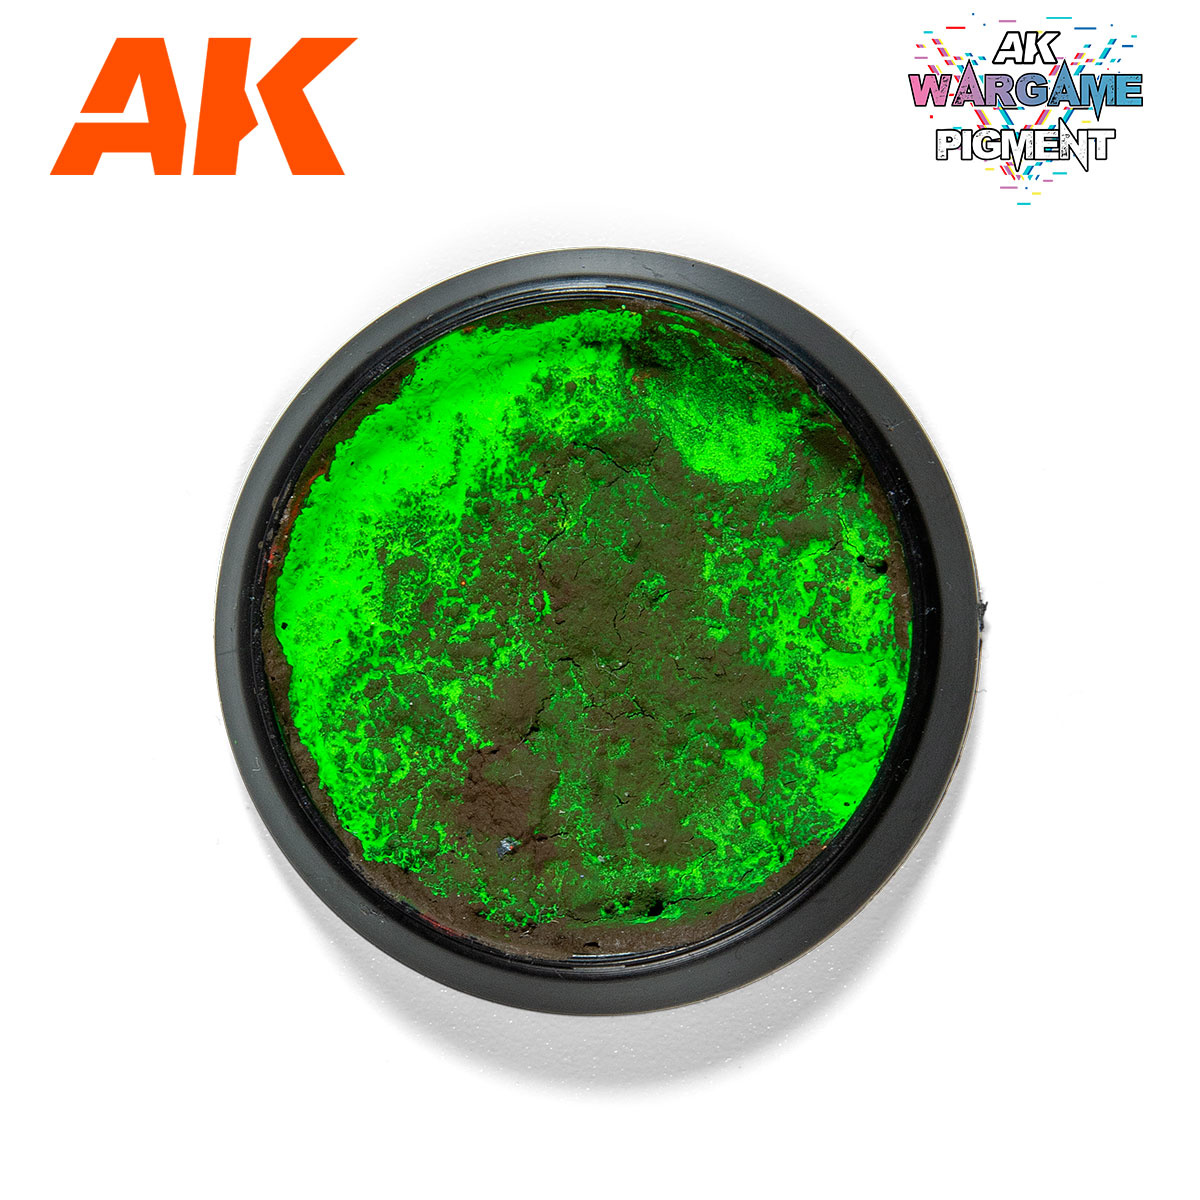 AK-Interactive Green Fluor - Wargame Liquid Pigment - 35ml - AK-Interactive - AK-1236